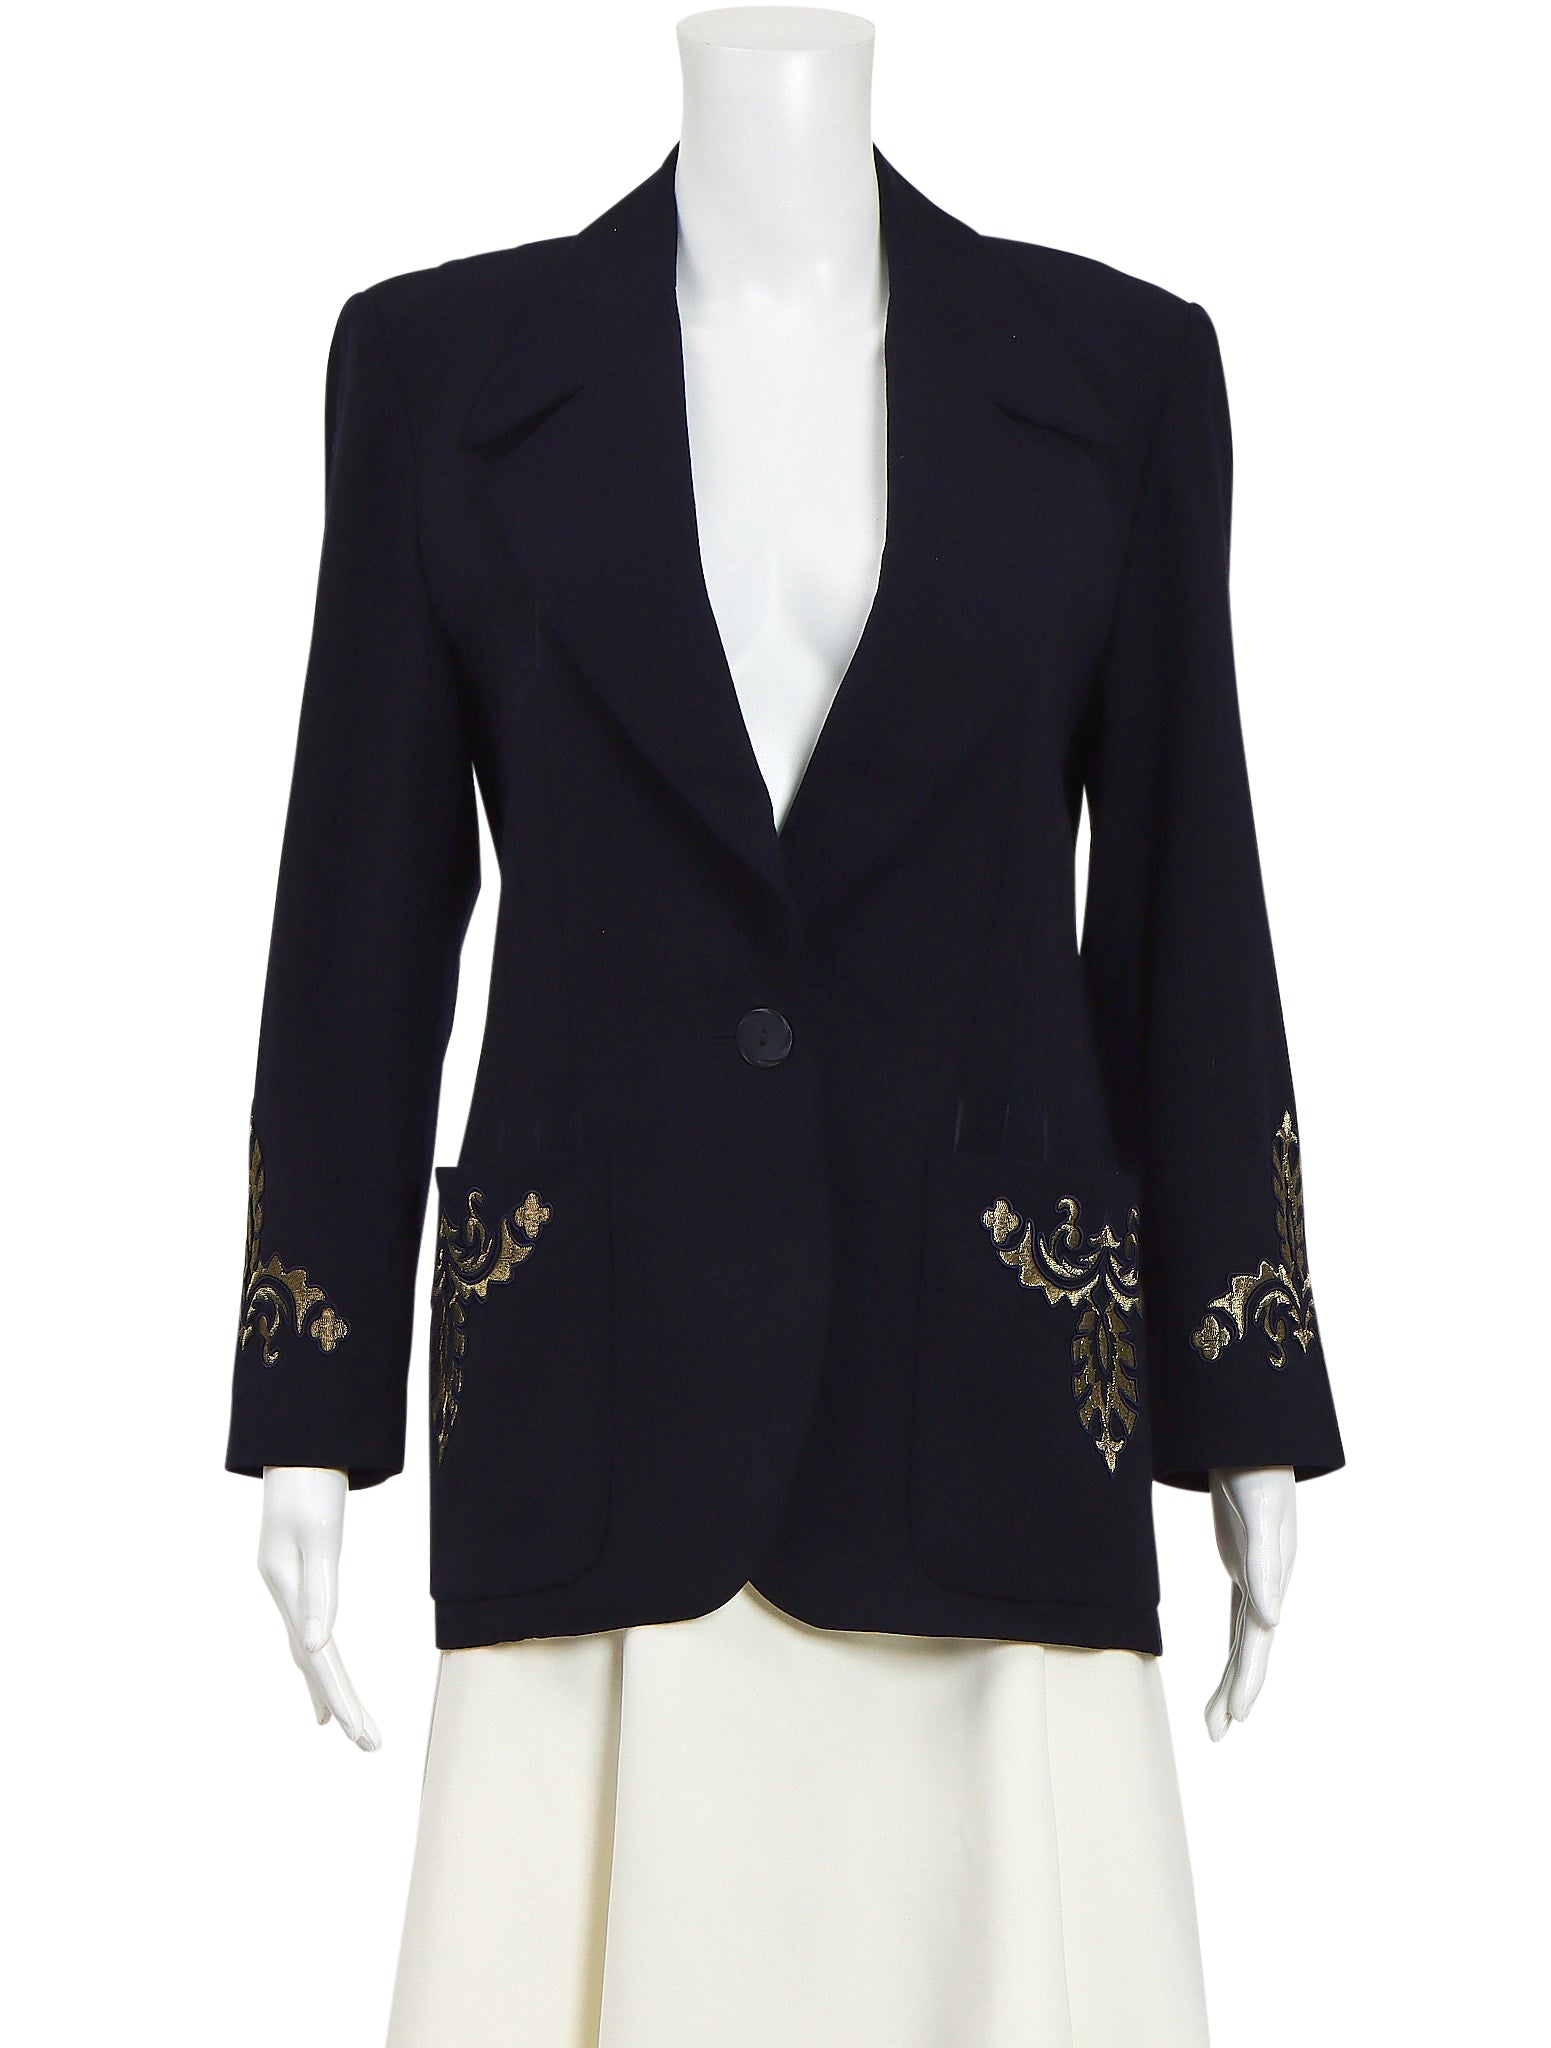 Escada Couture Margaretha Ley Vintage Black Wool Romper Dress